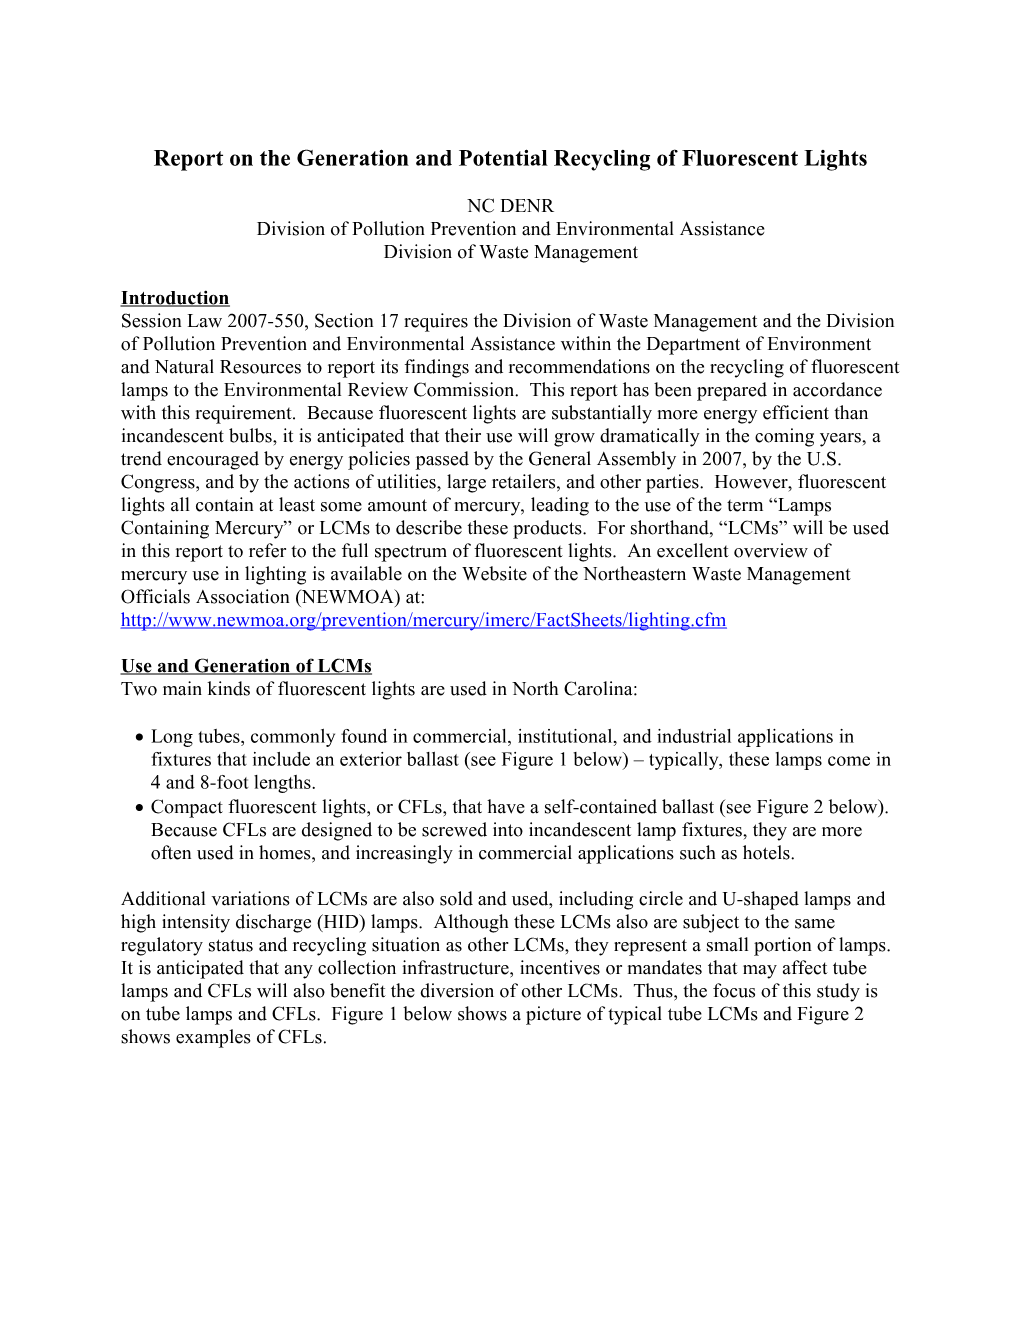 Plan for Fluorescent Light Study